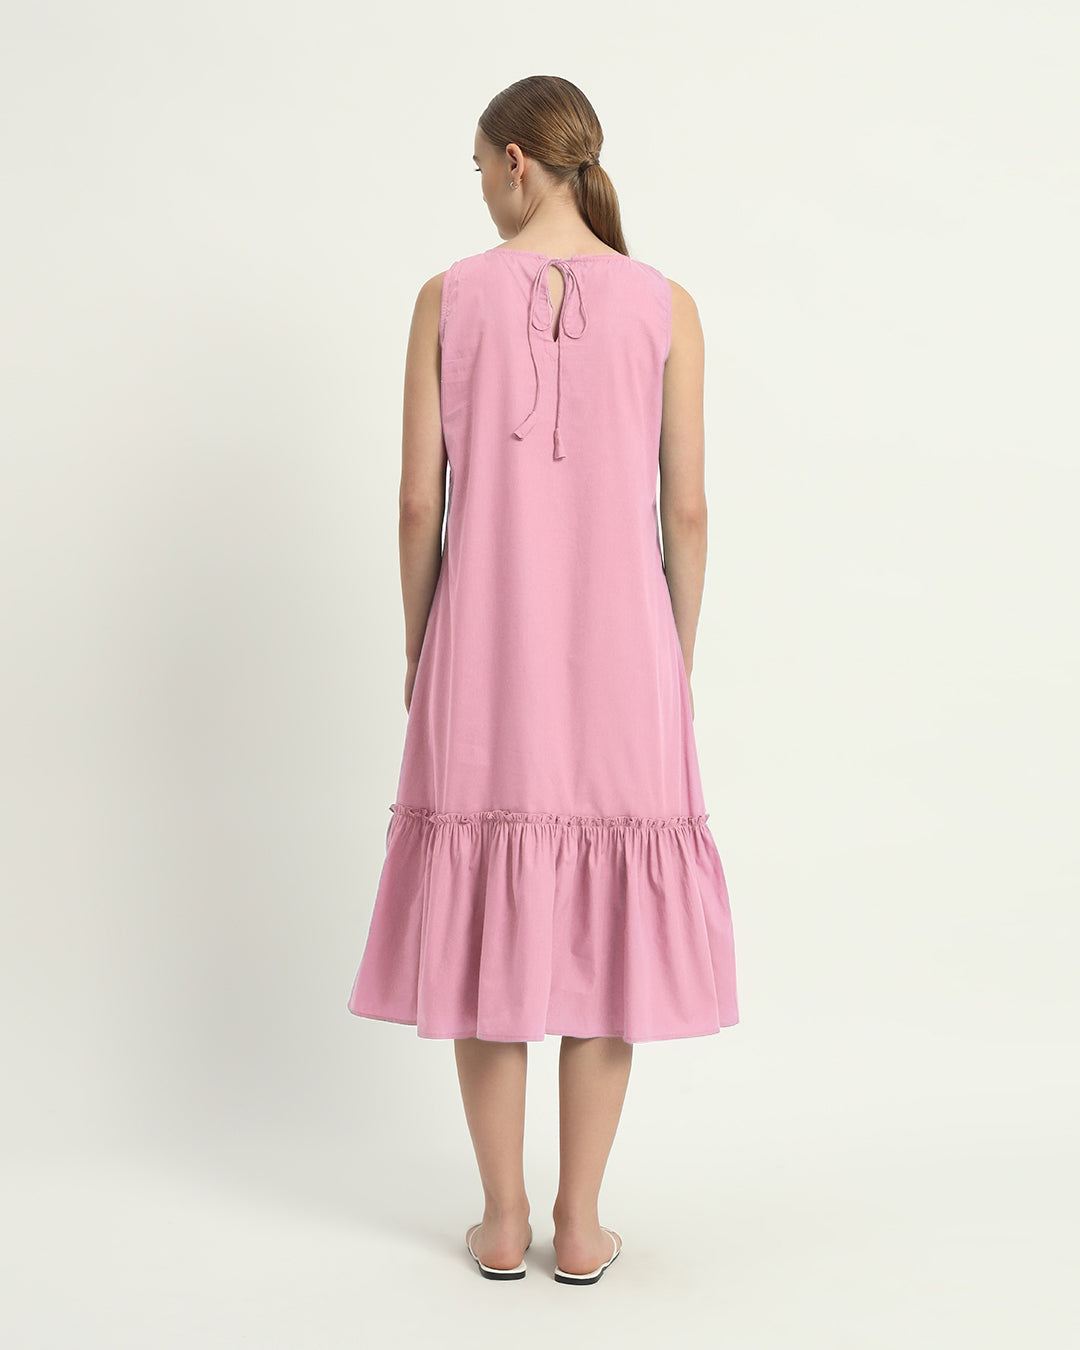 The Millis Fondant Pink Cotton Dress